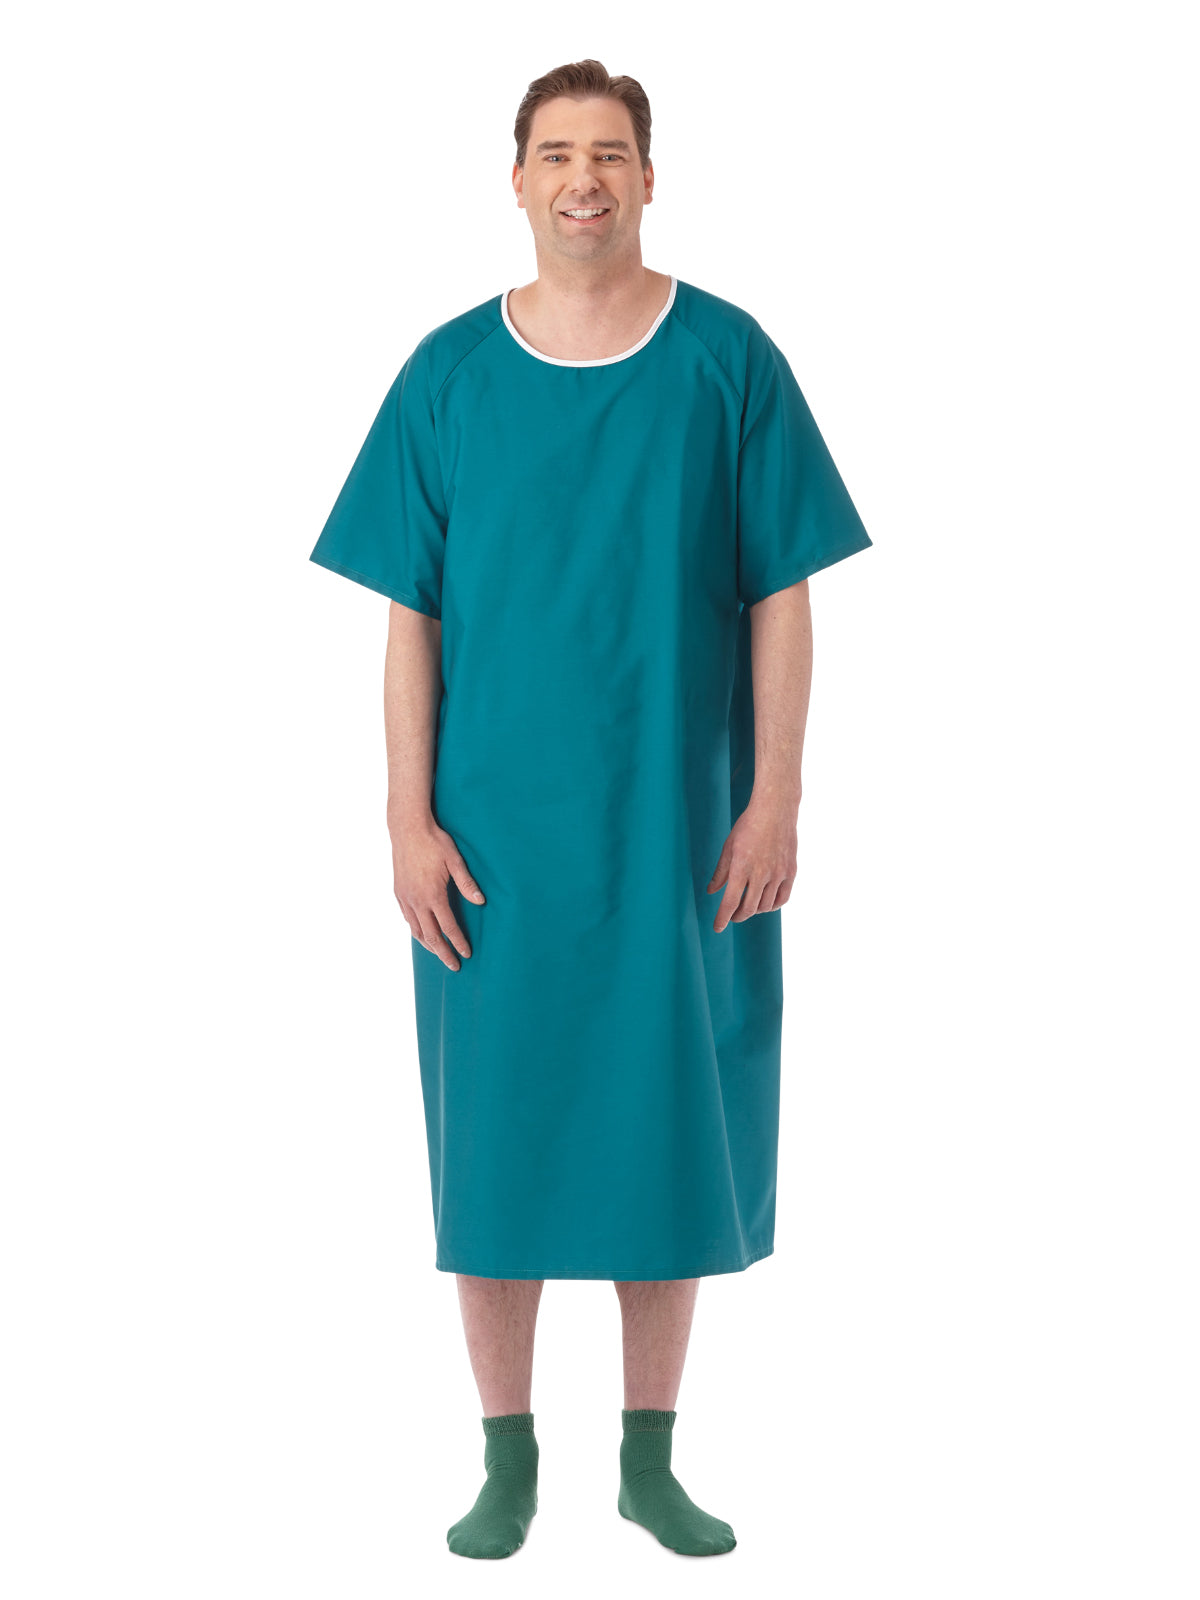 Unisex Patient Gown - 45311 - Hunter Green